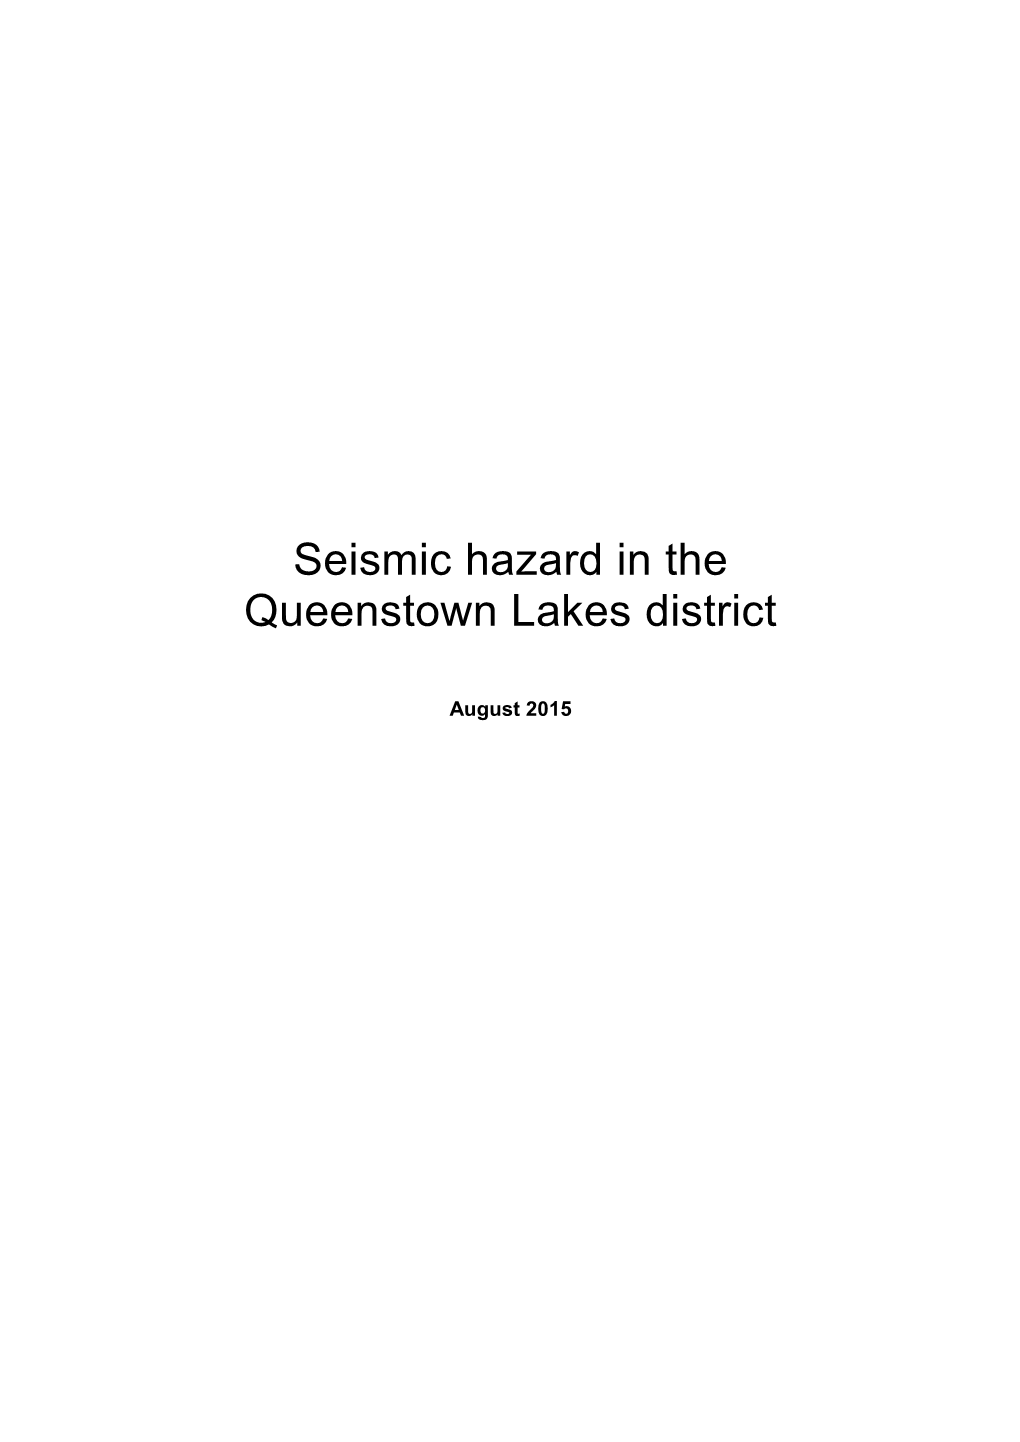 Seismic Hazard in the Queenstown Lakes District